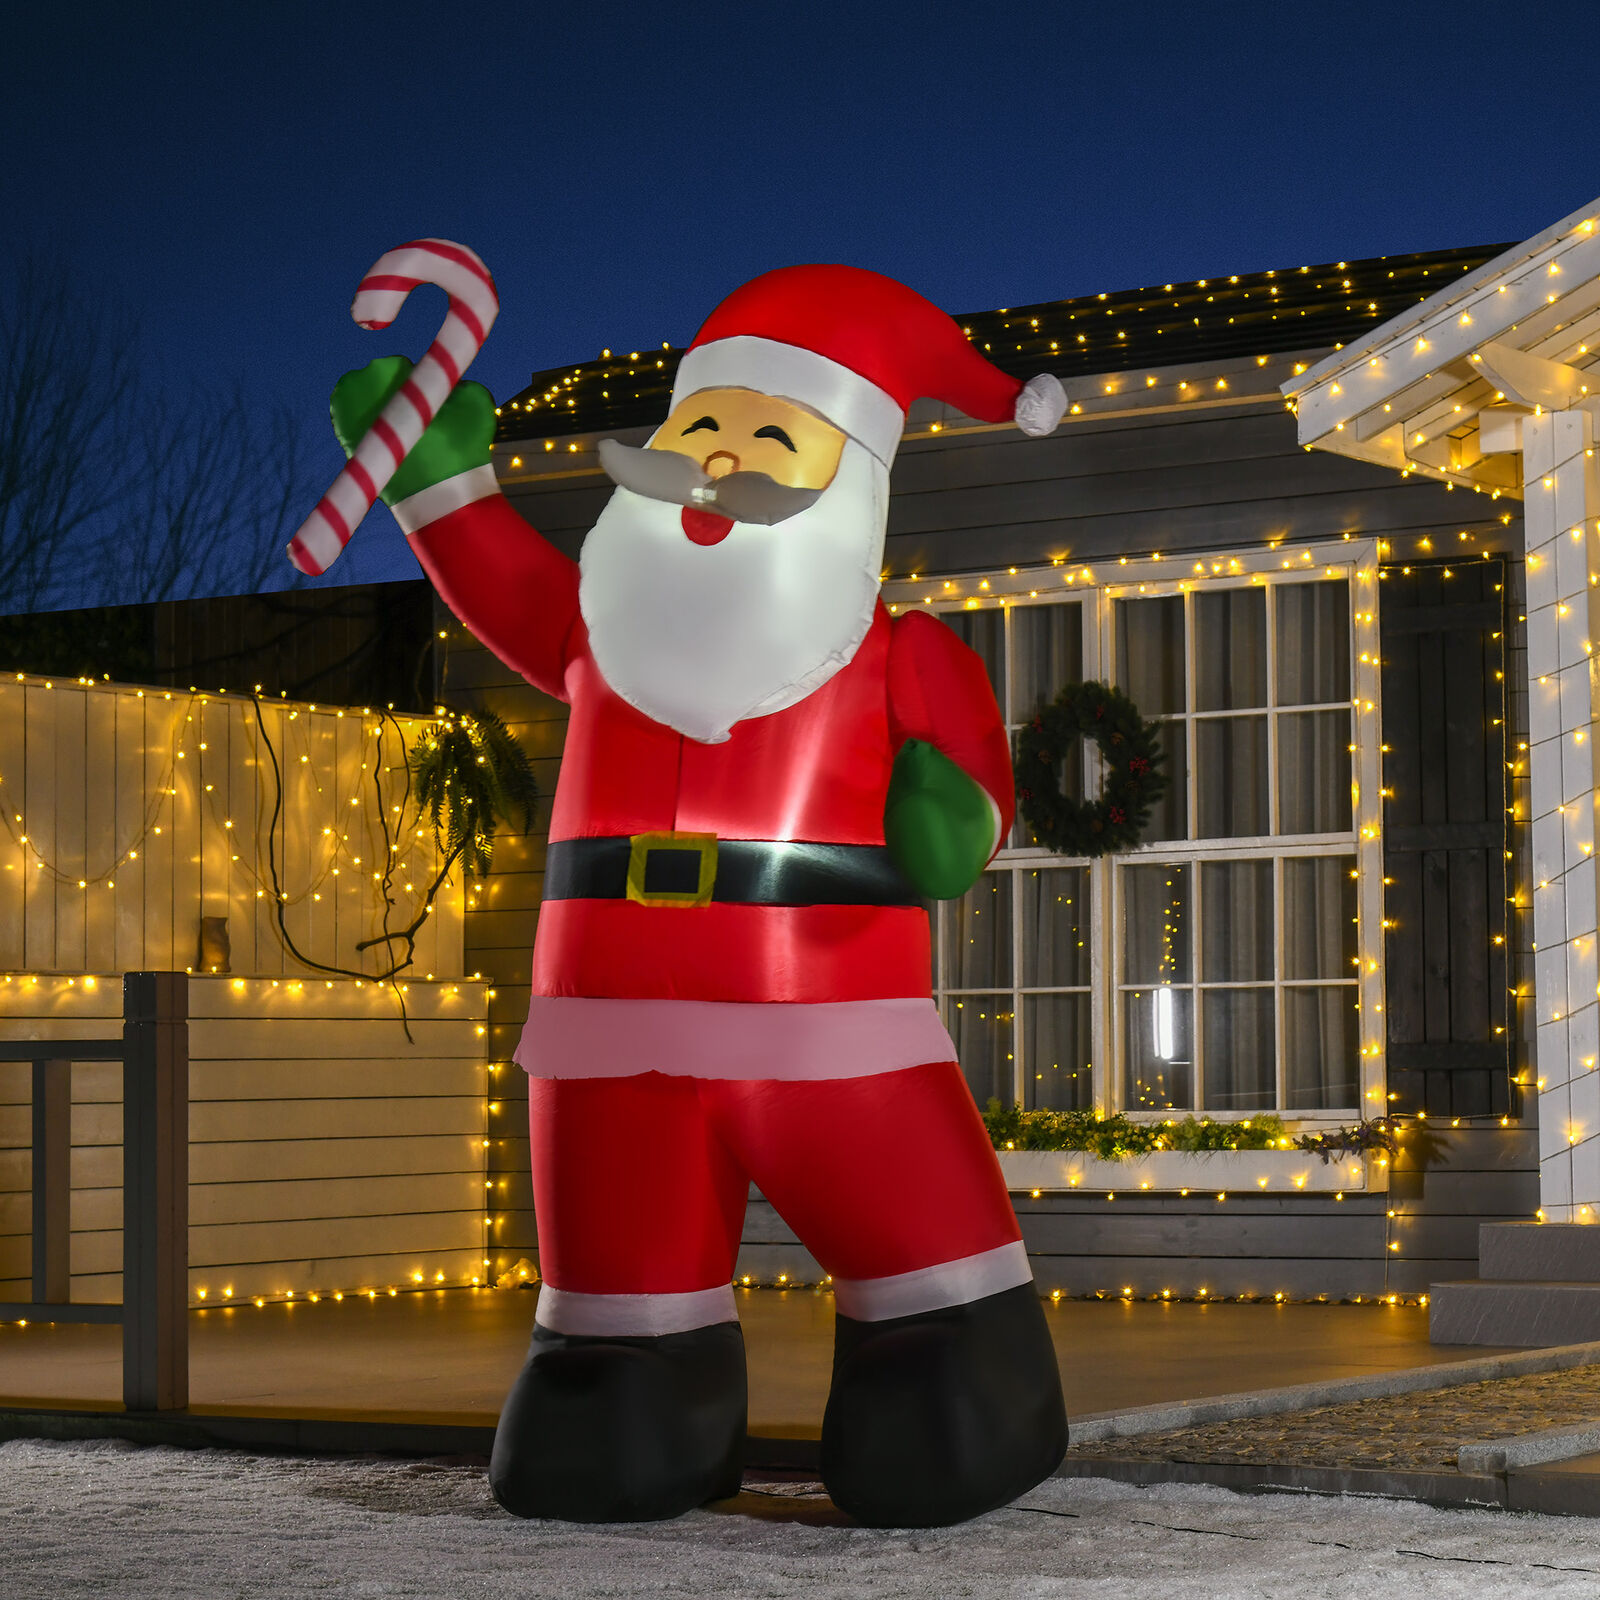 8' Christmas Inflatable Santa Holiday Yard Decor Outdoor Light Up LED